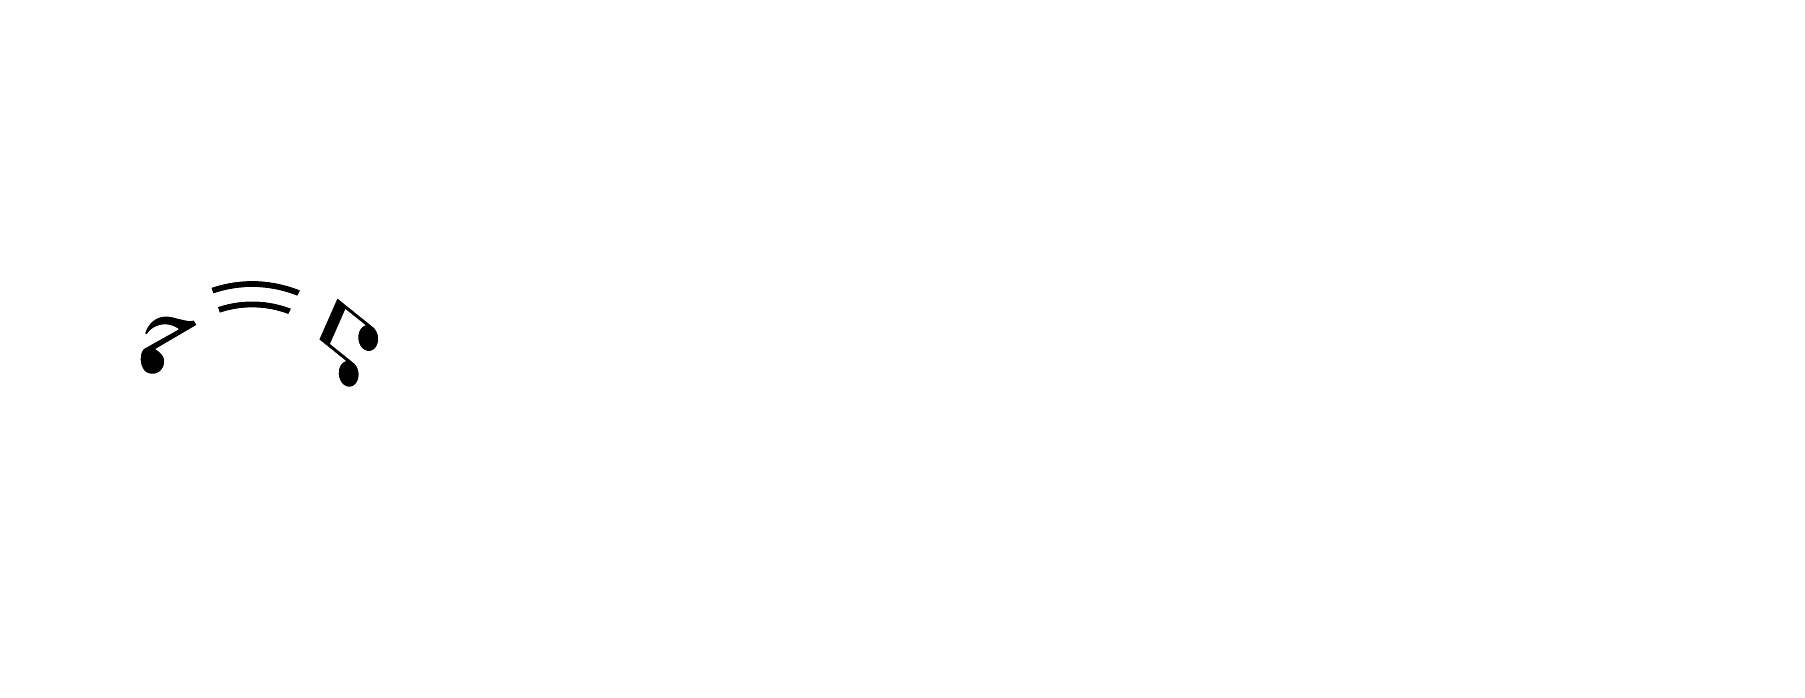 SONGSTER STUDIOS